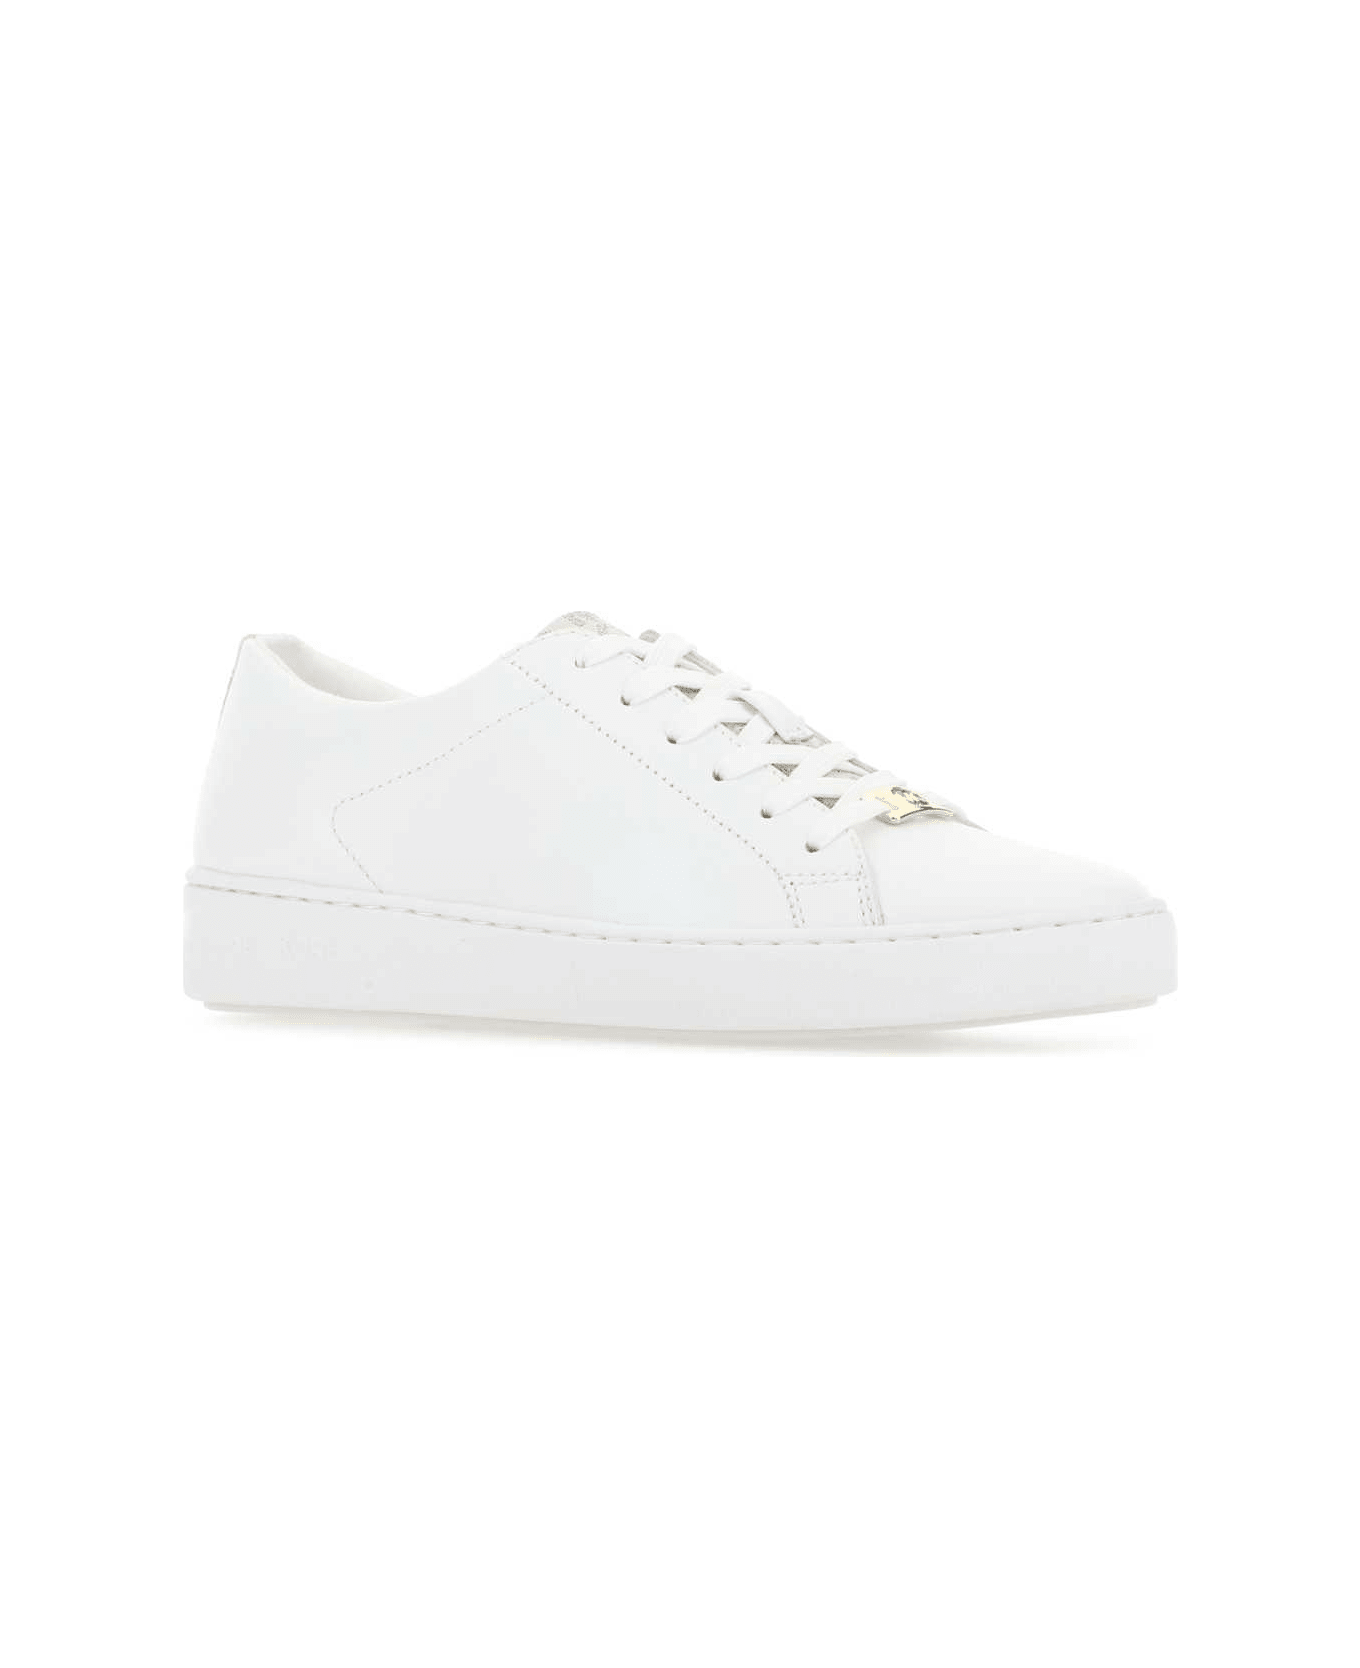 Michael Kors White Leather Keaton Sneakers - VANILLA